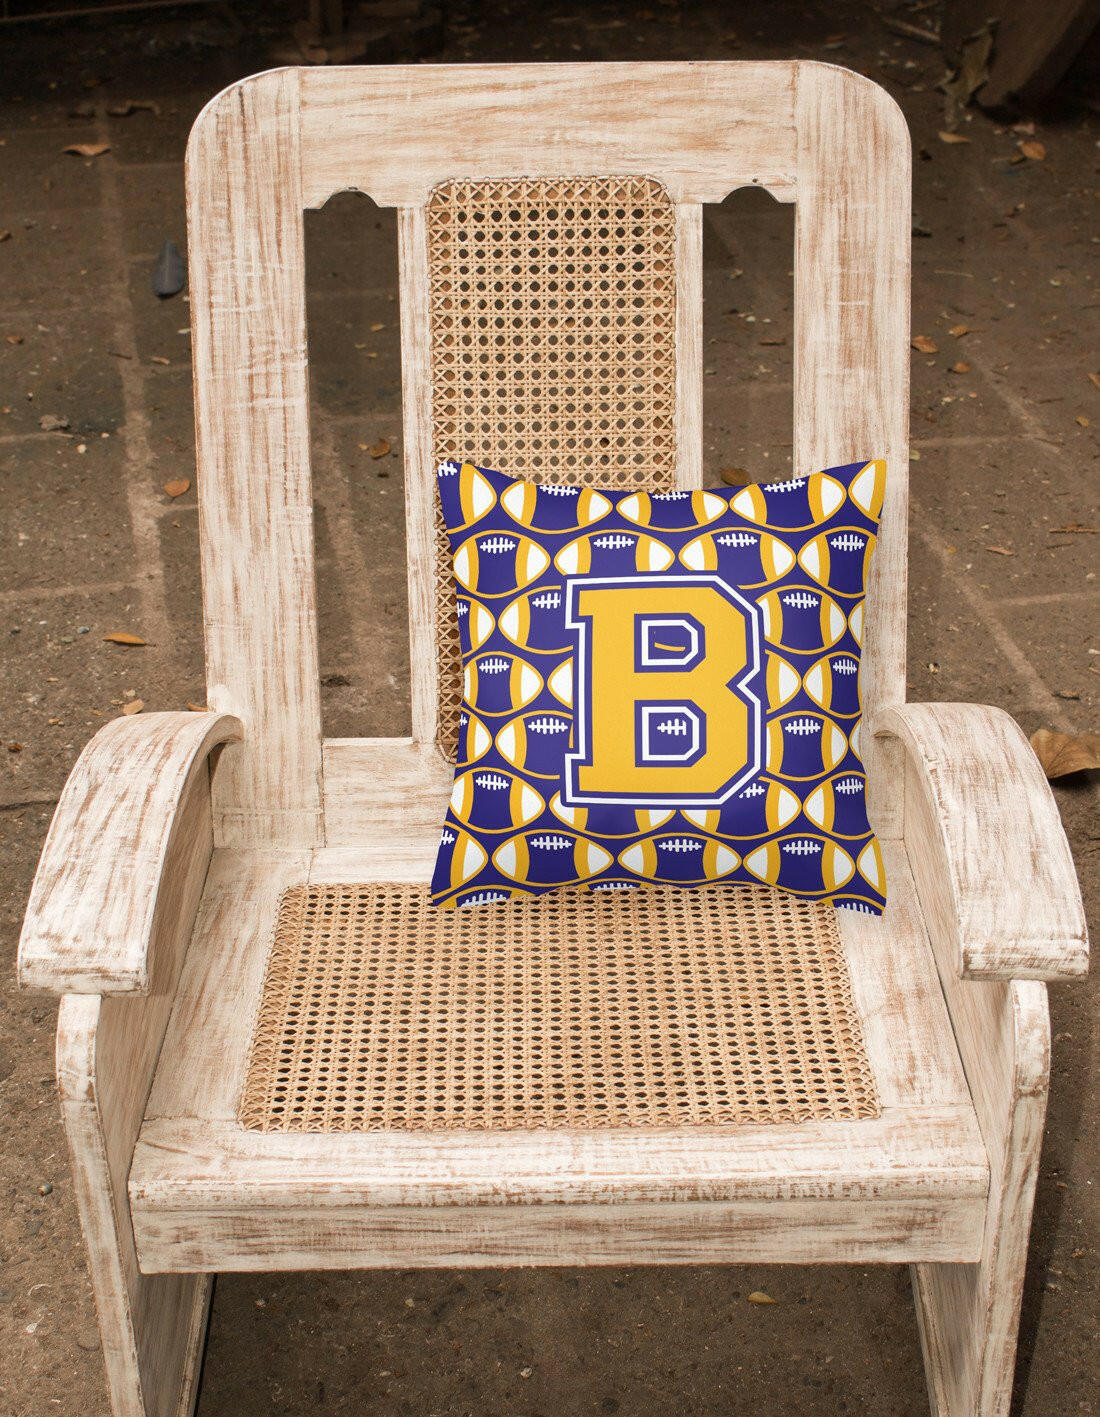 Letter B Football Purple and Gold Fabric Decorative Pillow CJ1064-BPW1414 by Caroline's Treasures